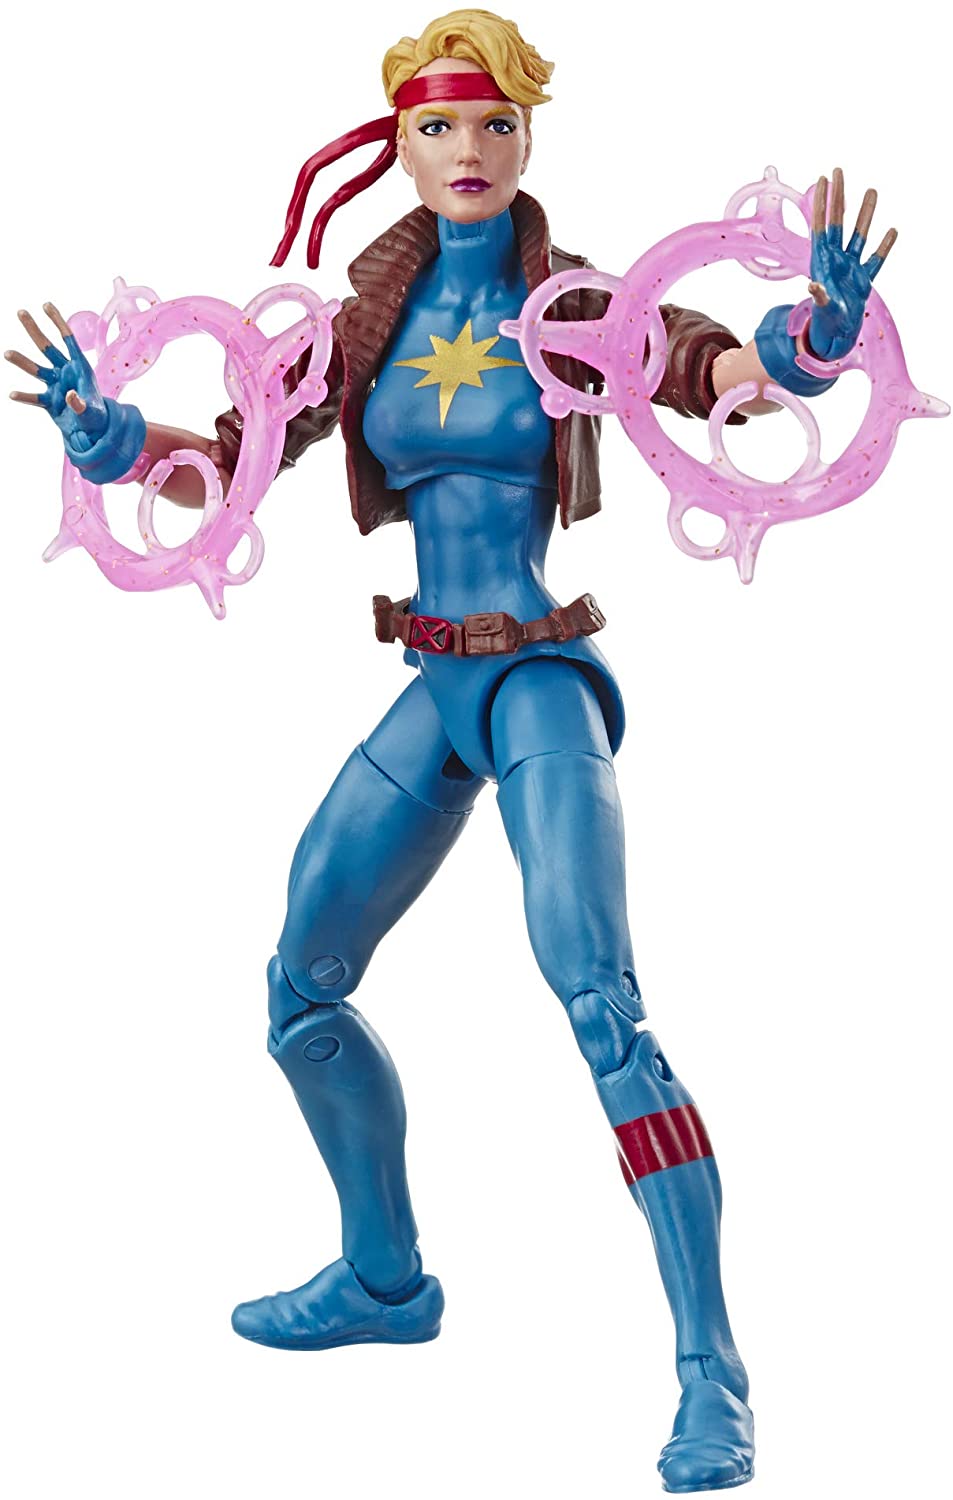 Hasbro Marvel Retro Figure Collection: X-Men - Dazzler Action Figure